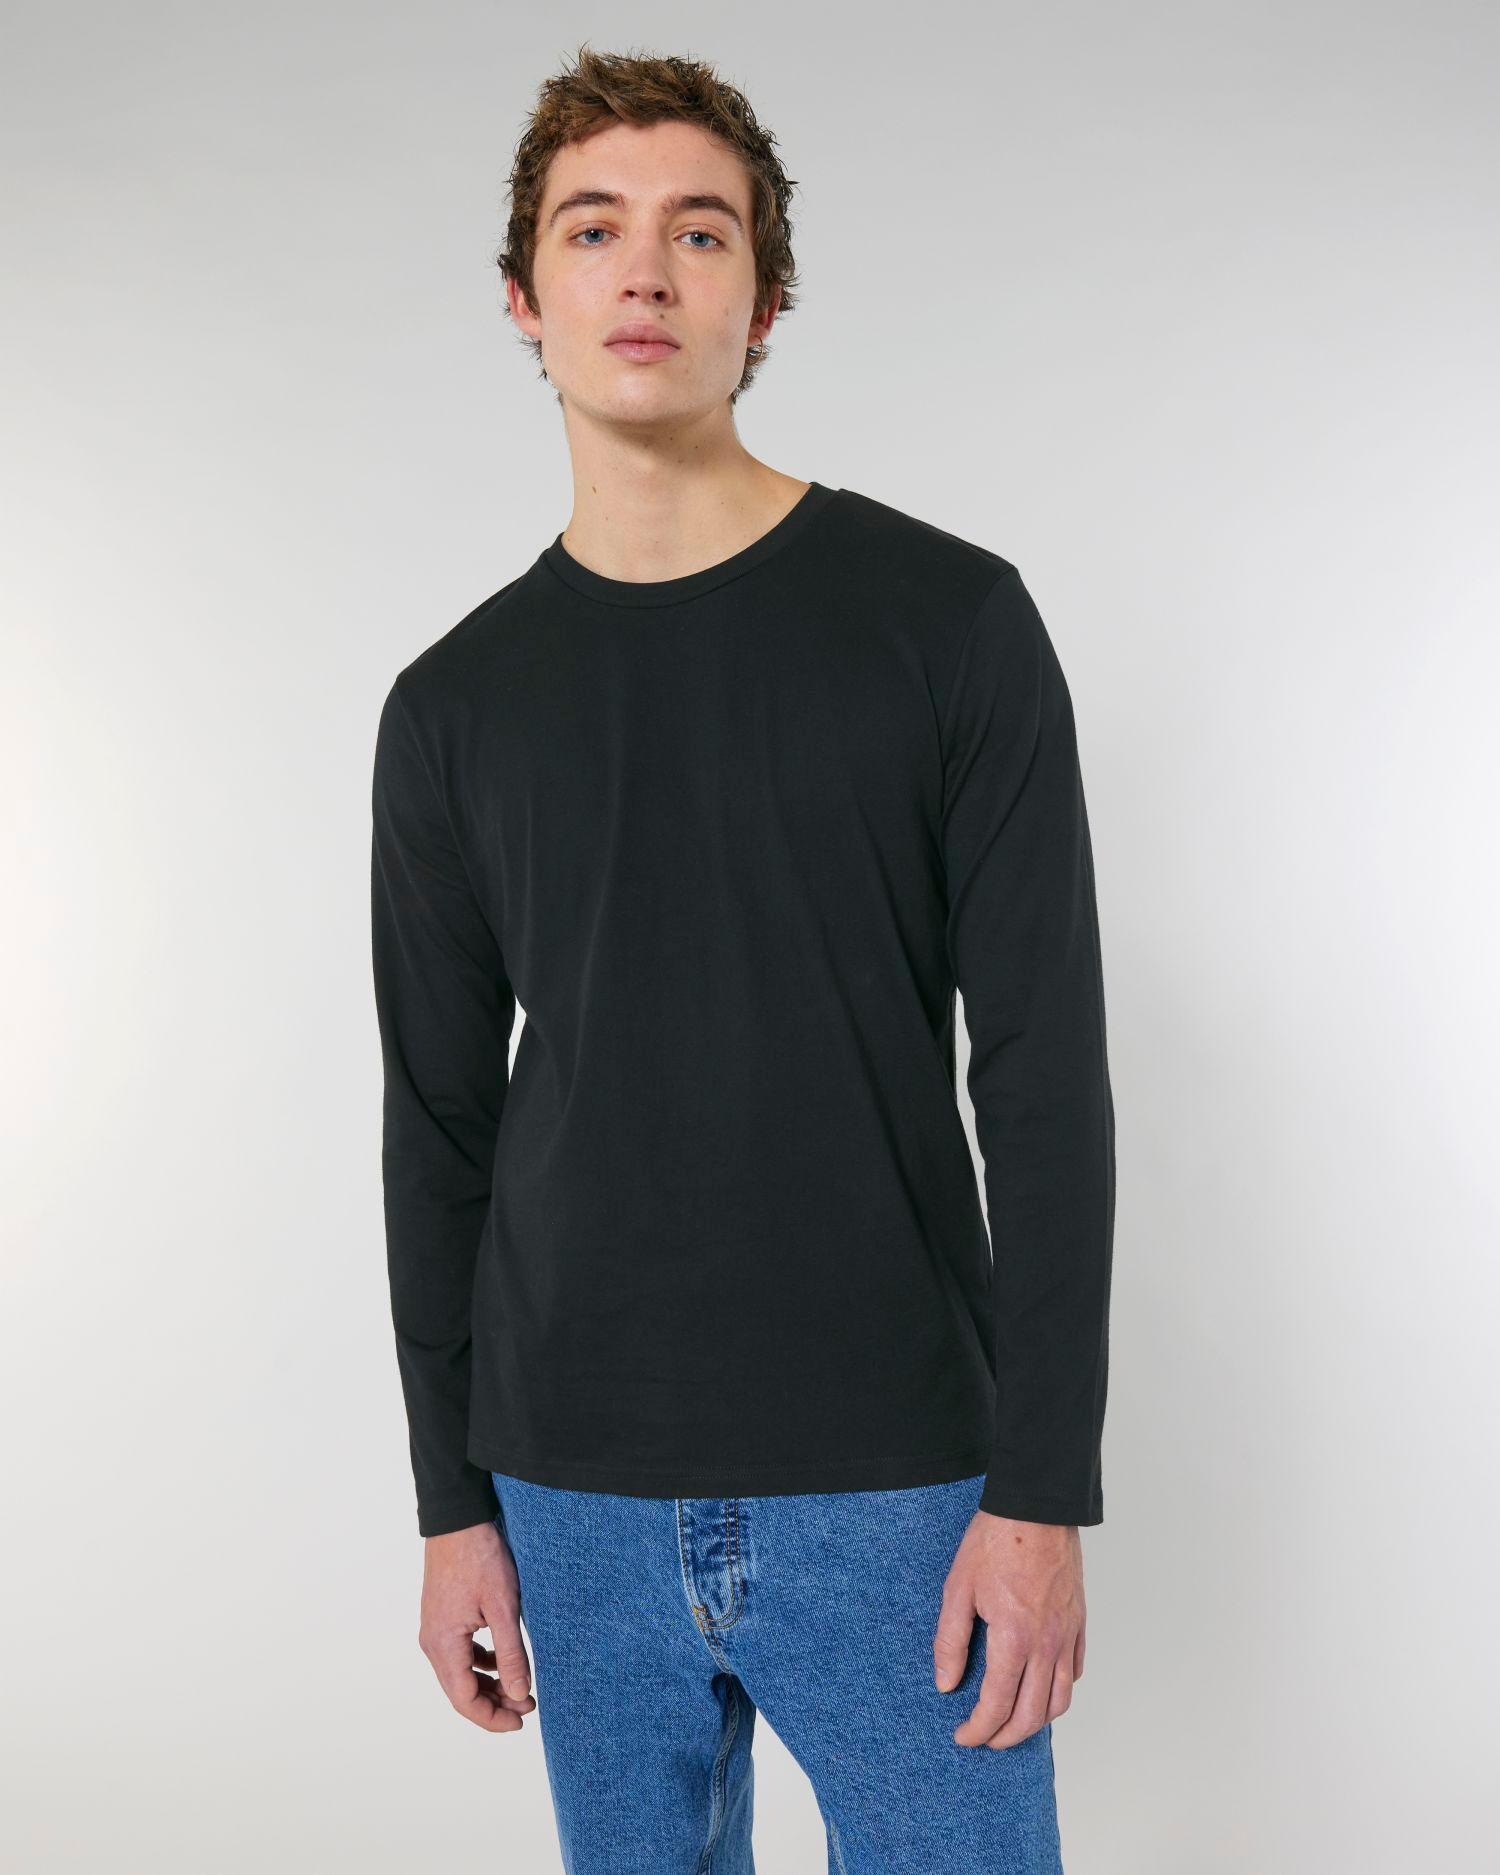 Tee-Shirt Homme Manches Longues | 100% Coton Bio | Stanley Shuffler Black